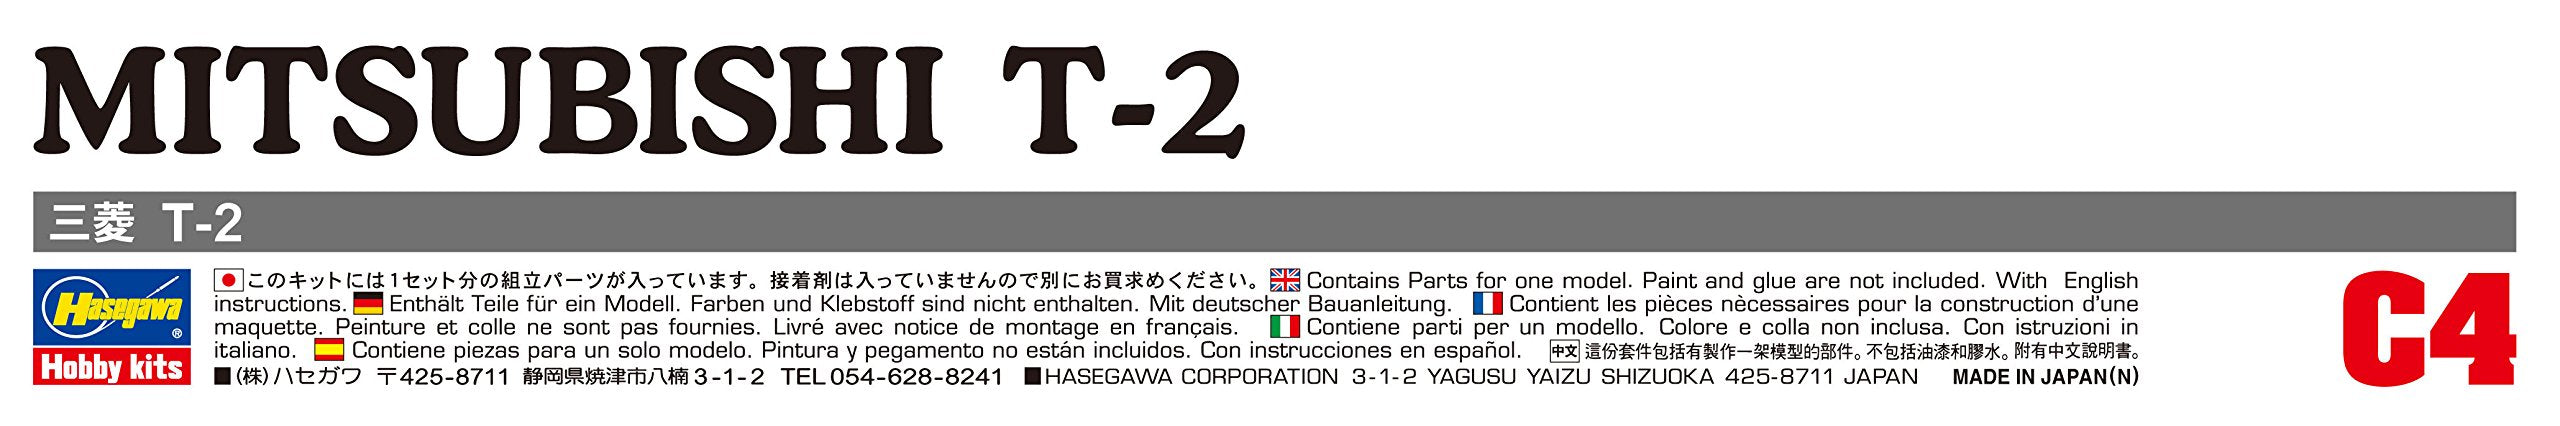 HASEGAWA 1/72 Mitsubishi T-2 JASDF Super-Sonic Advance Jet Trainer Plastique Modèle